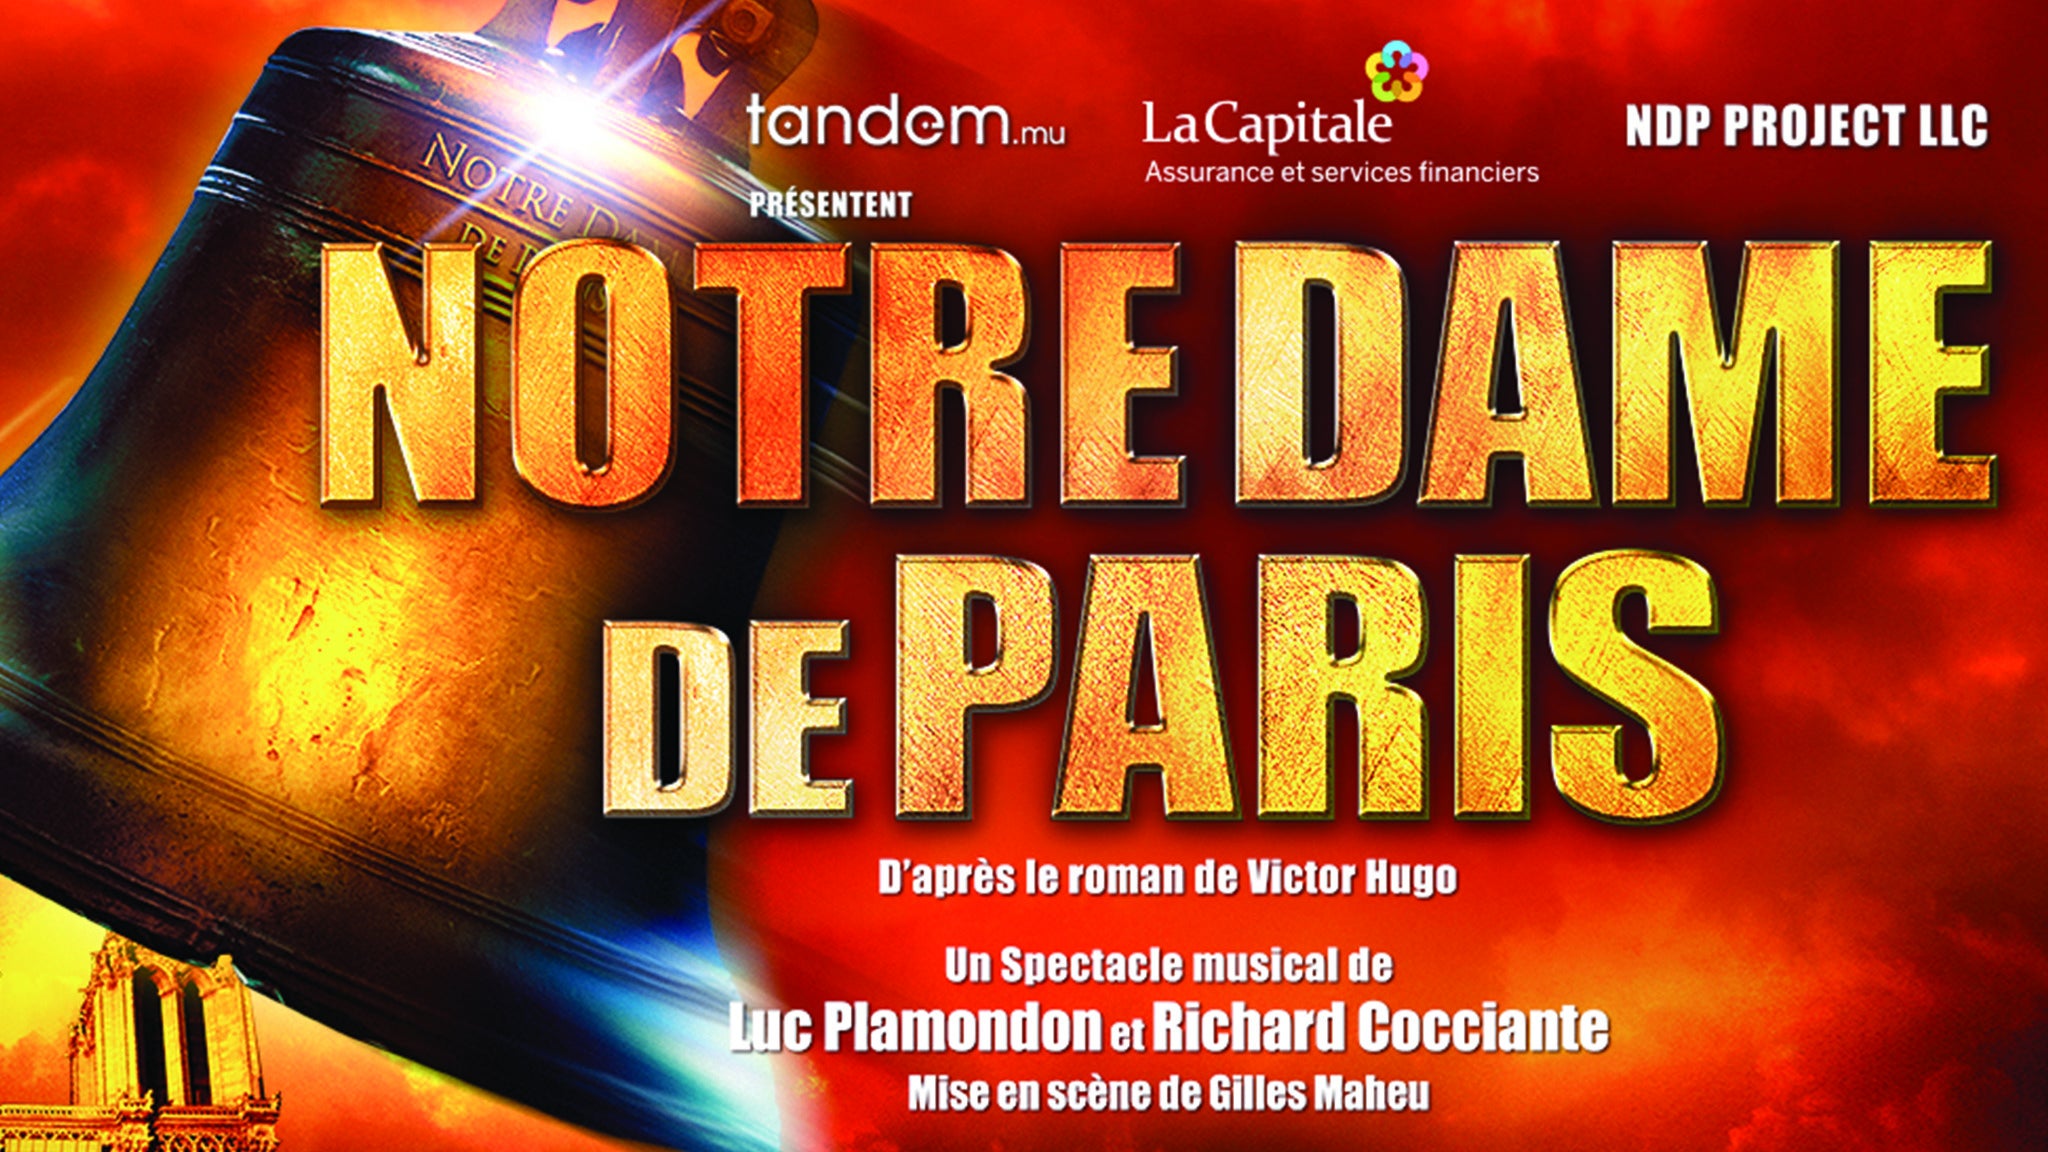 Notre Dame de Paris in Ottawa promo photo for Promo 25% off Promo 25% de rabais presale offer code